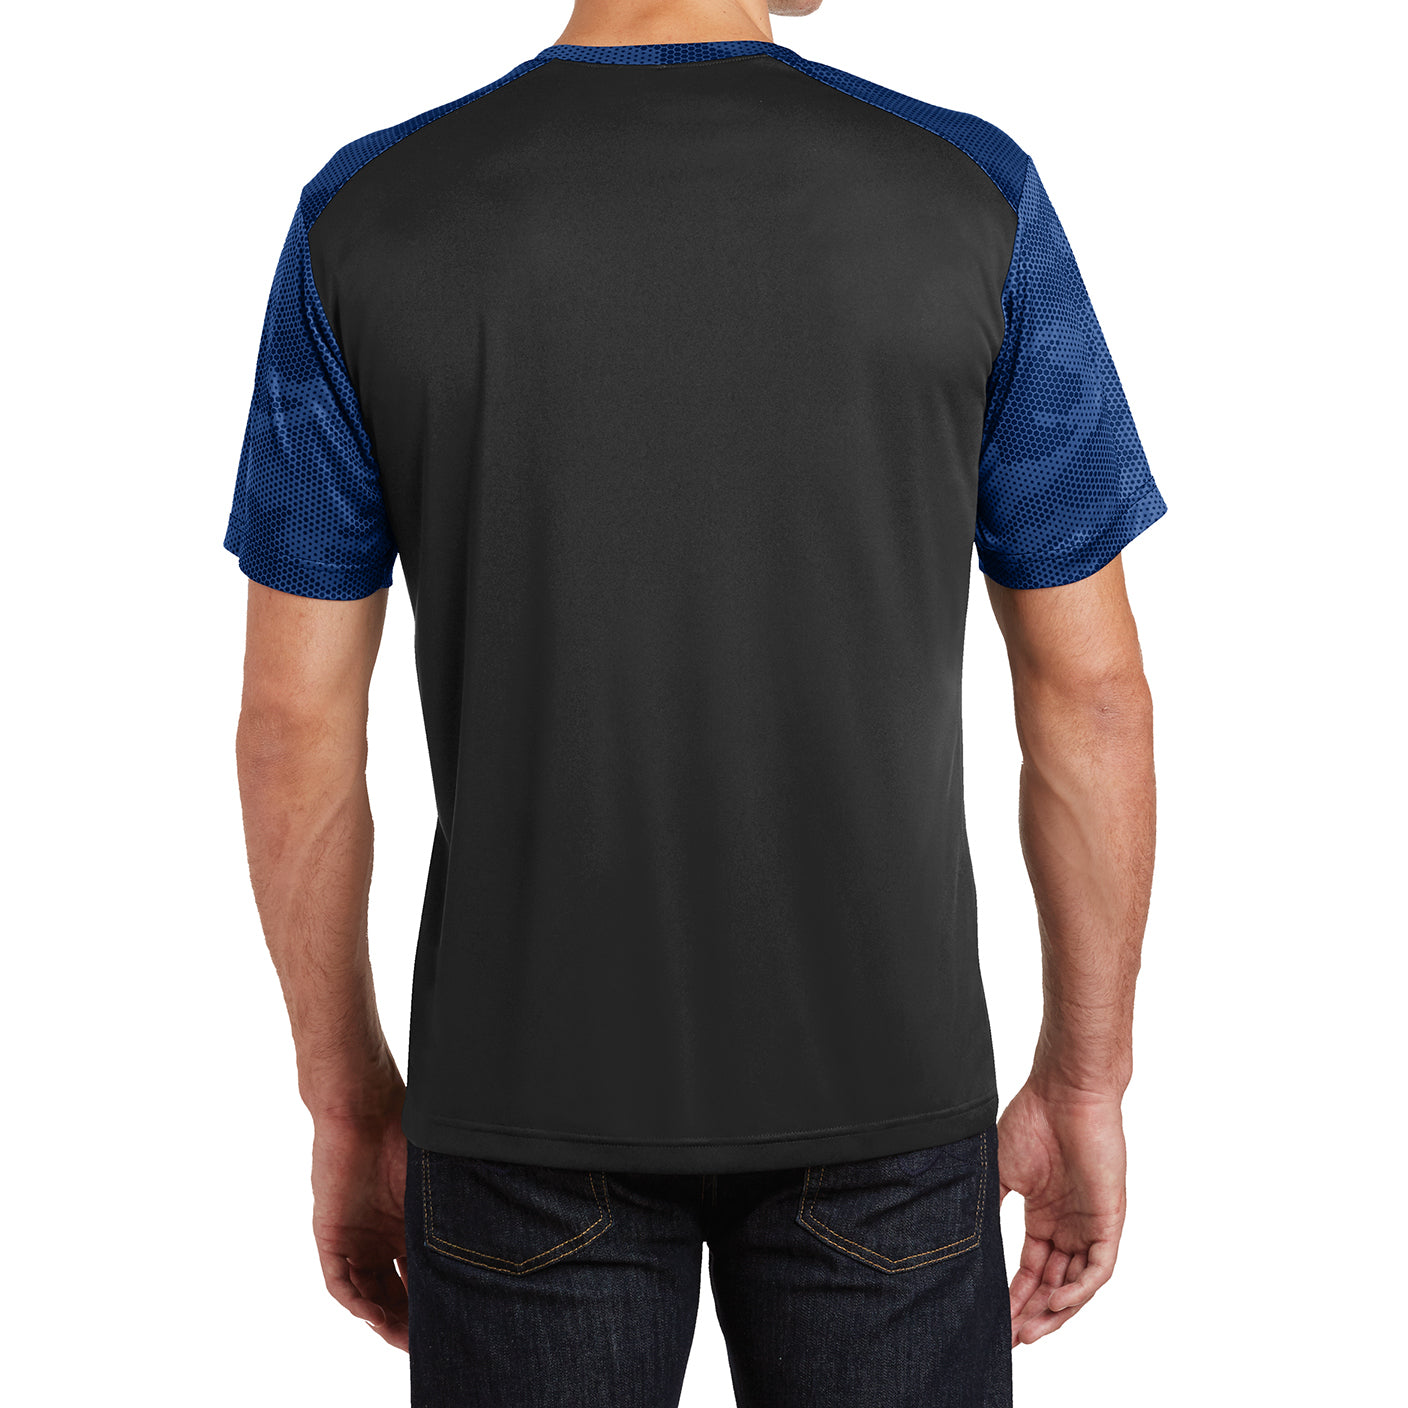 Men's CamoHex Colorblock Tee Shirt Black/ True Royal Back